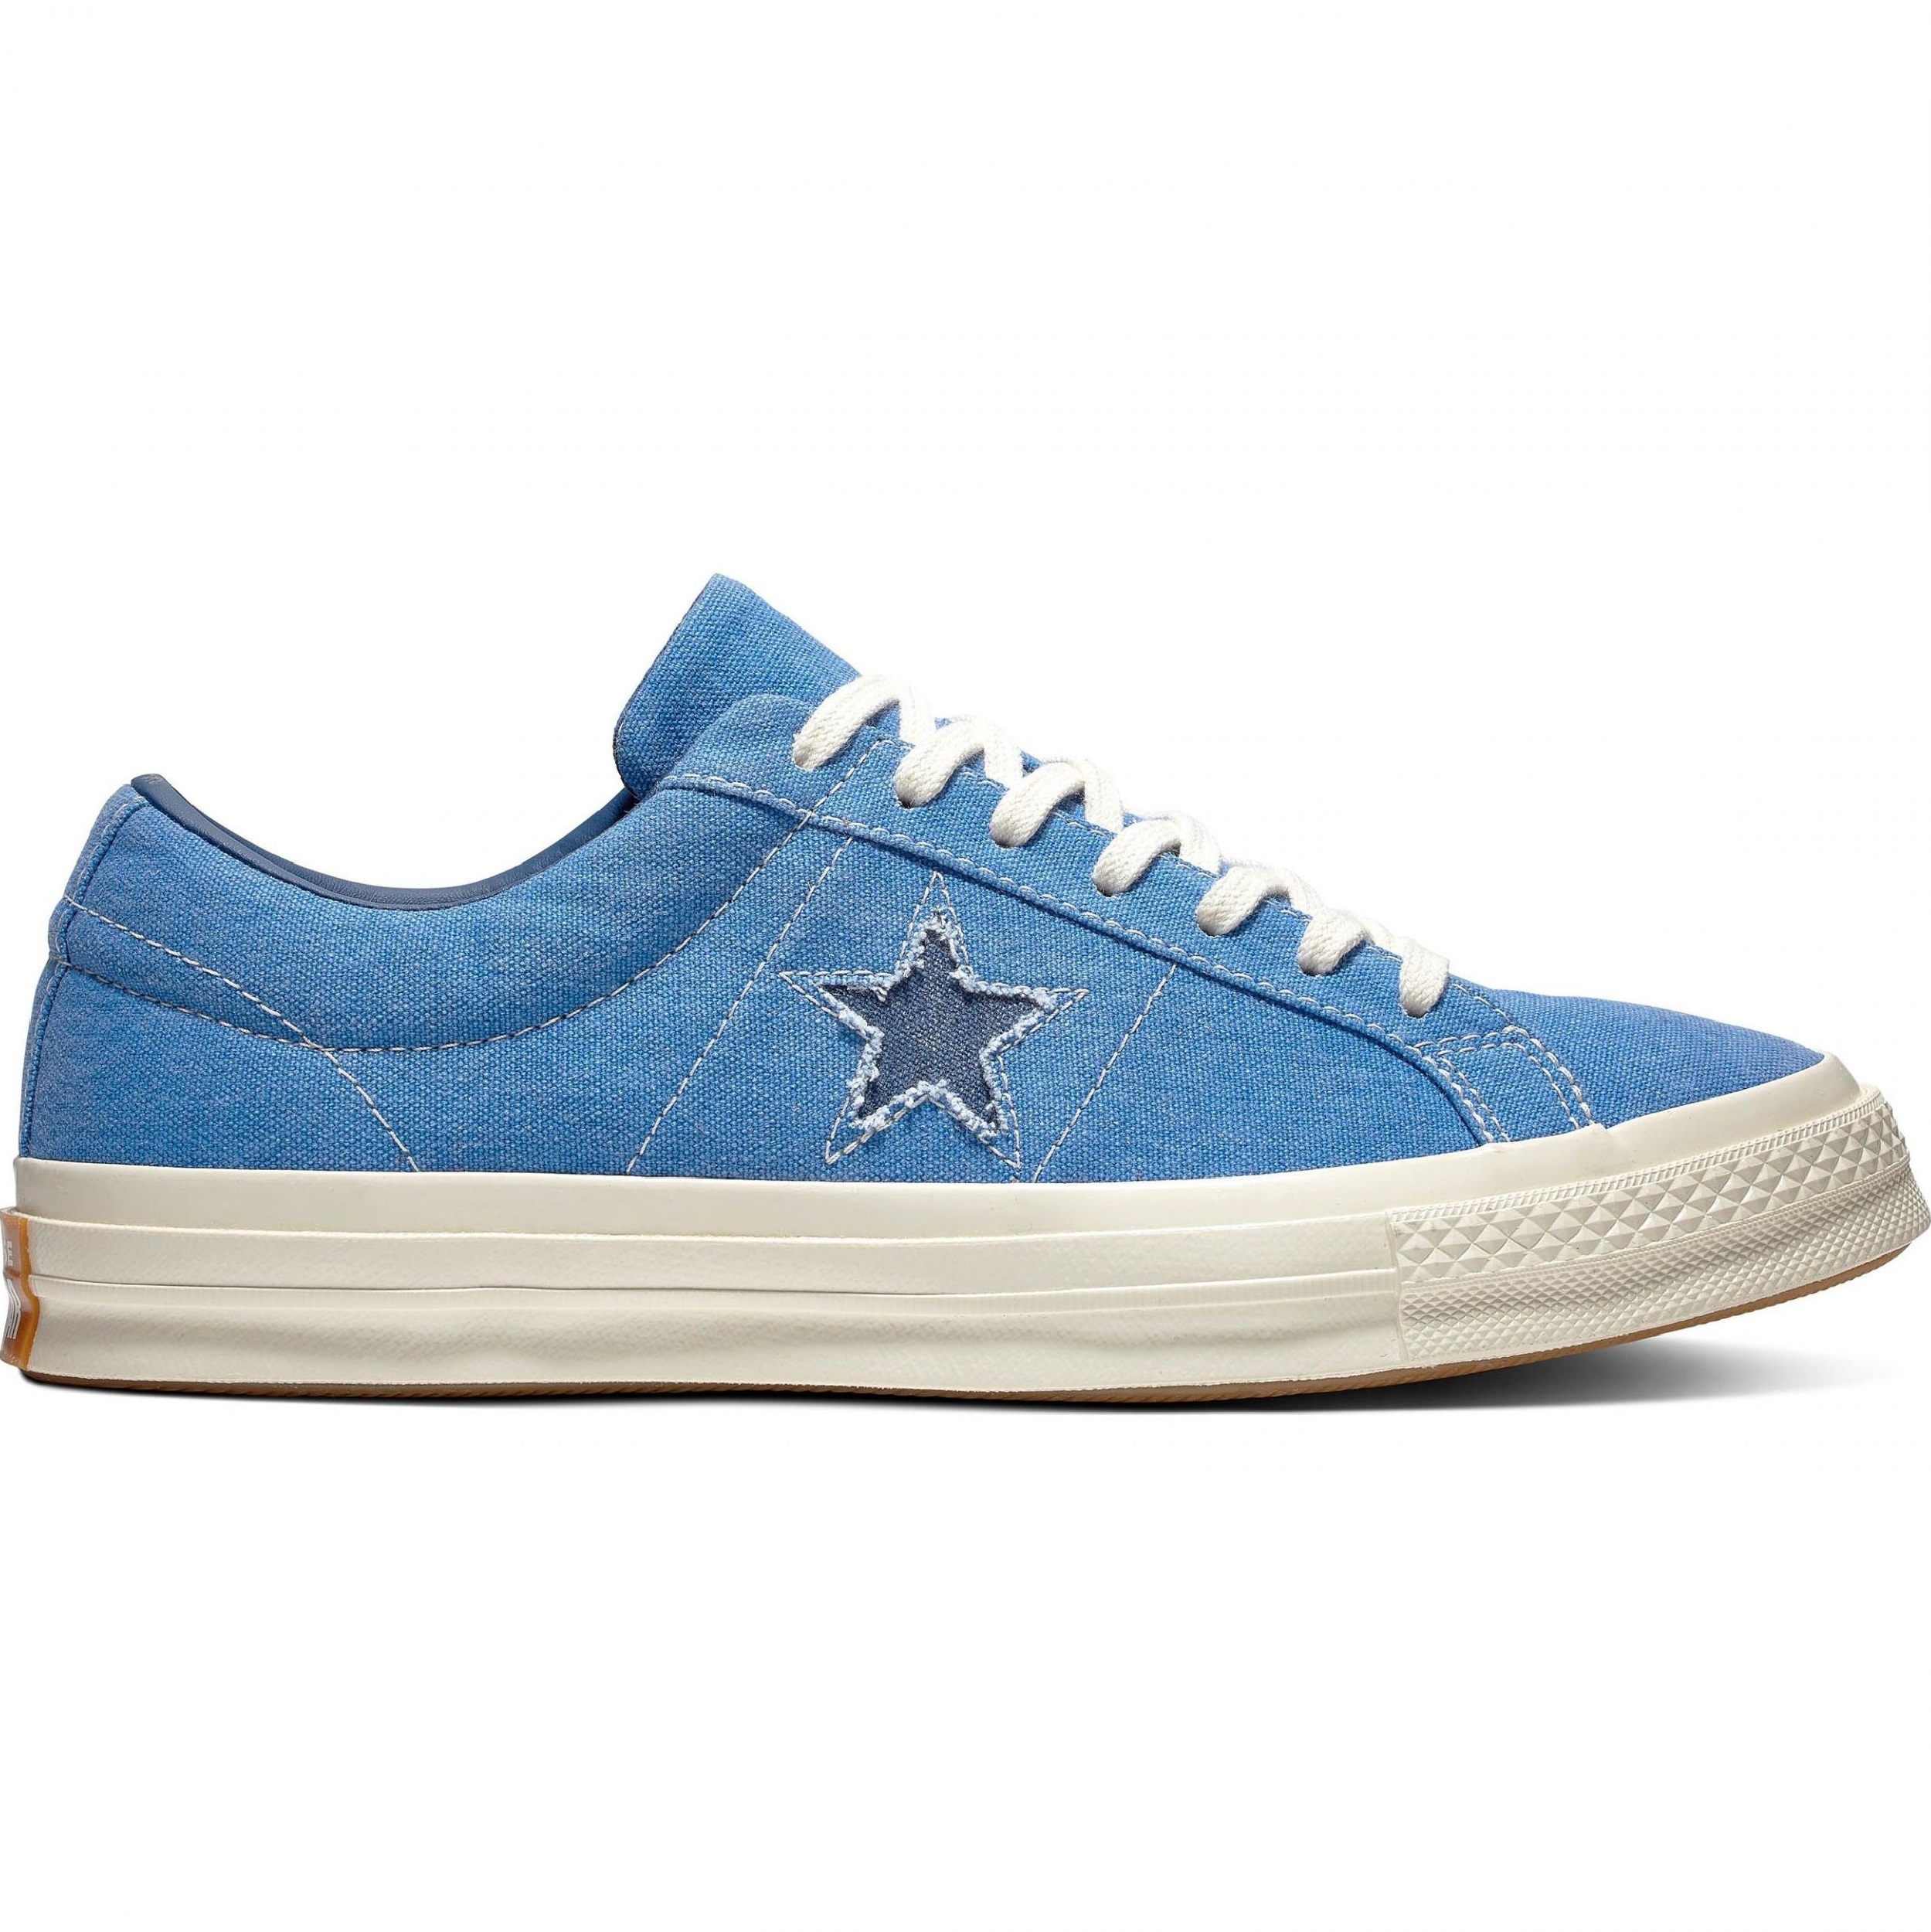 Converse One Star Sunbaked Sneaker